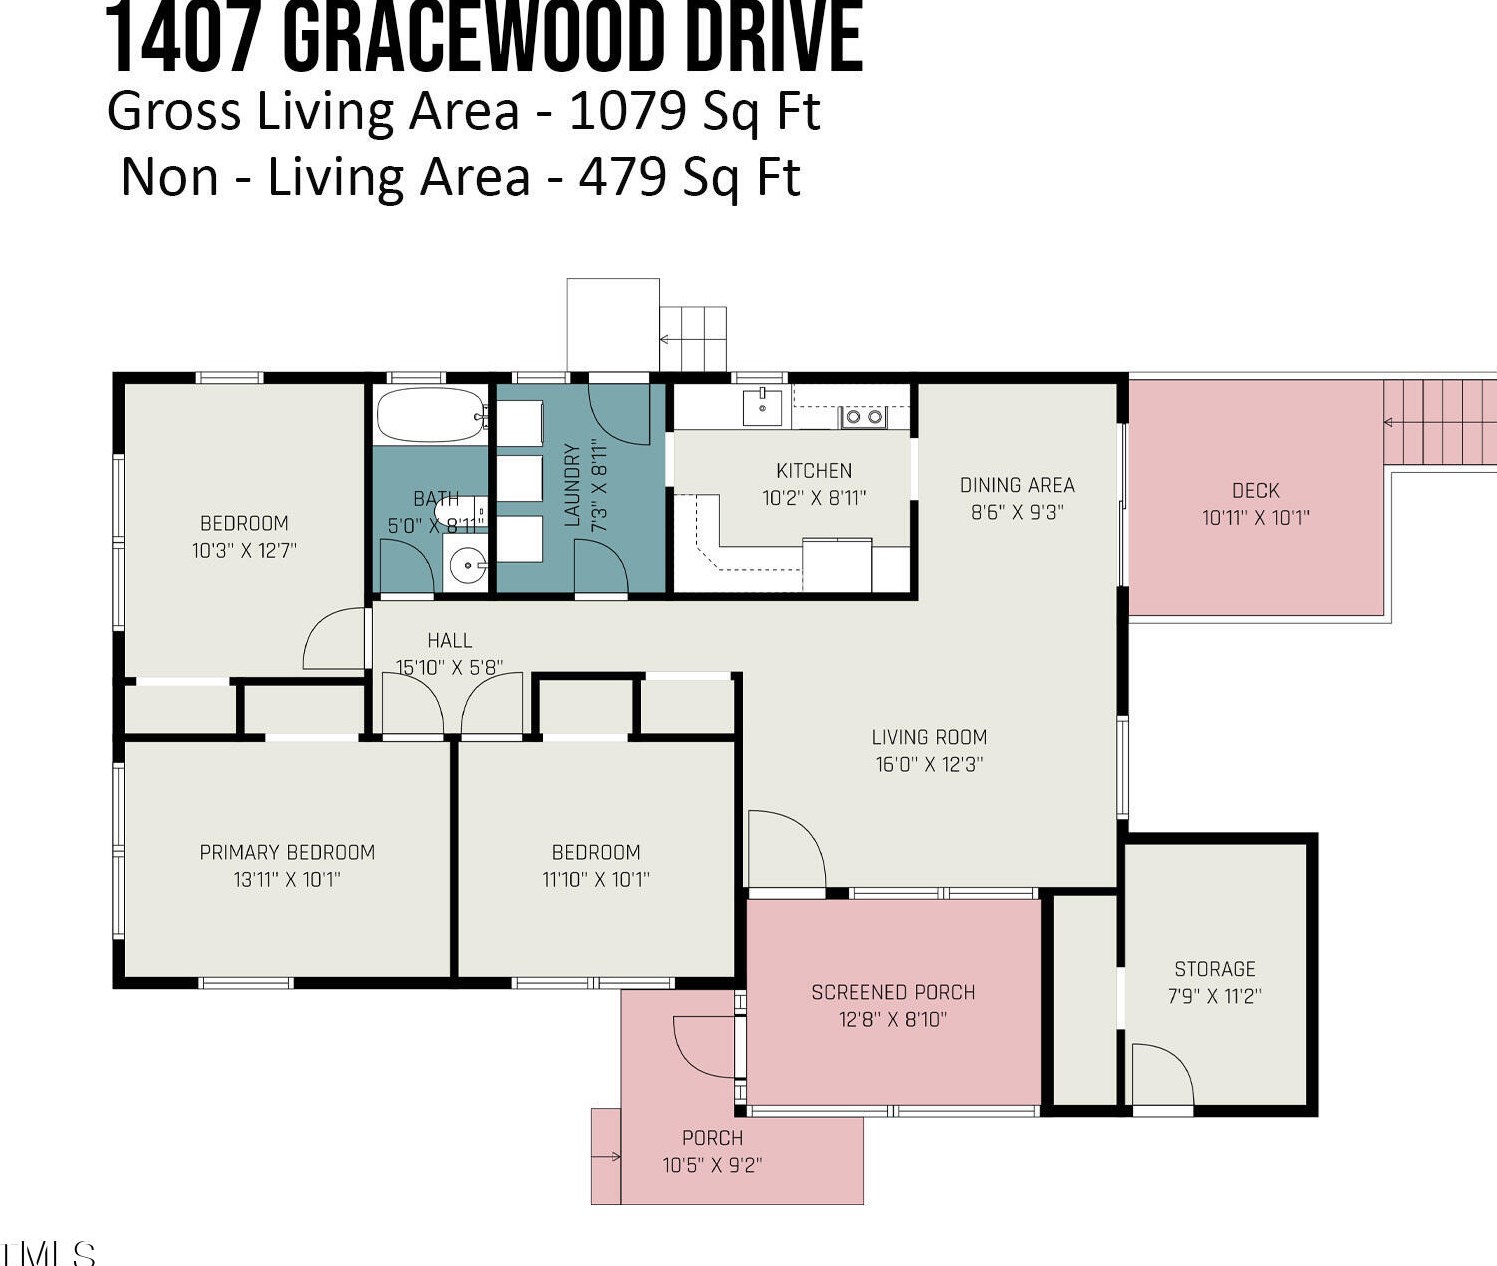 1407 Gracewood Dr, Greensboro, NC 27408